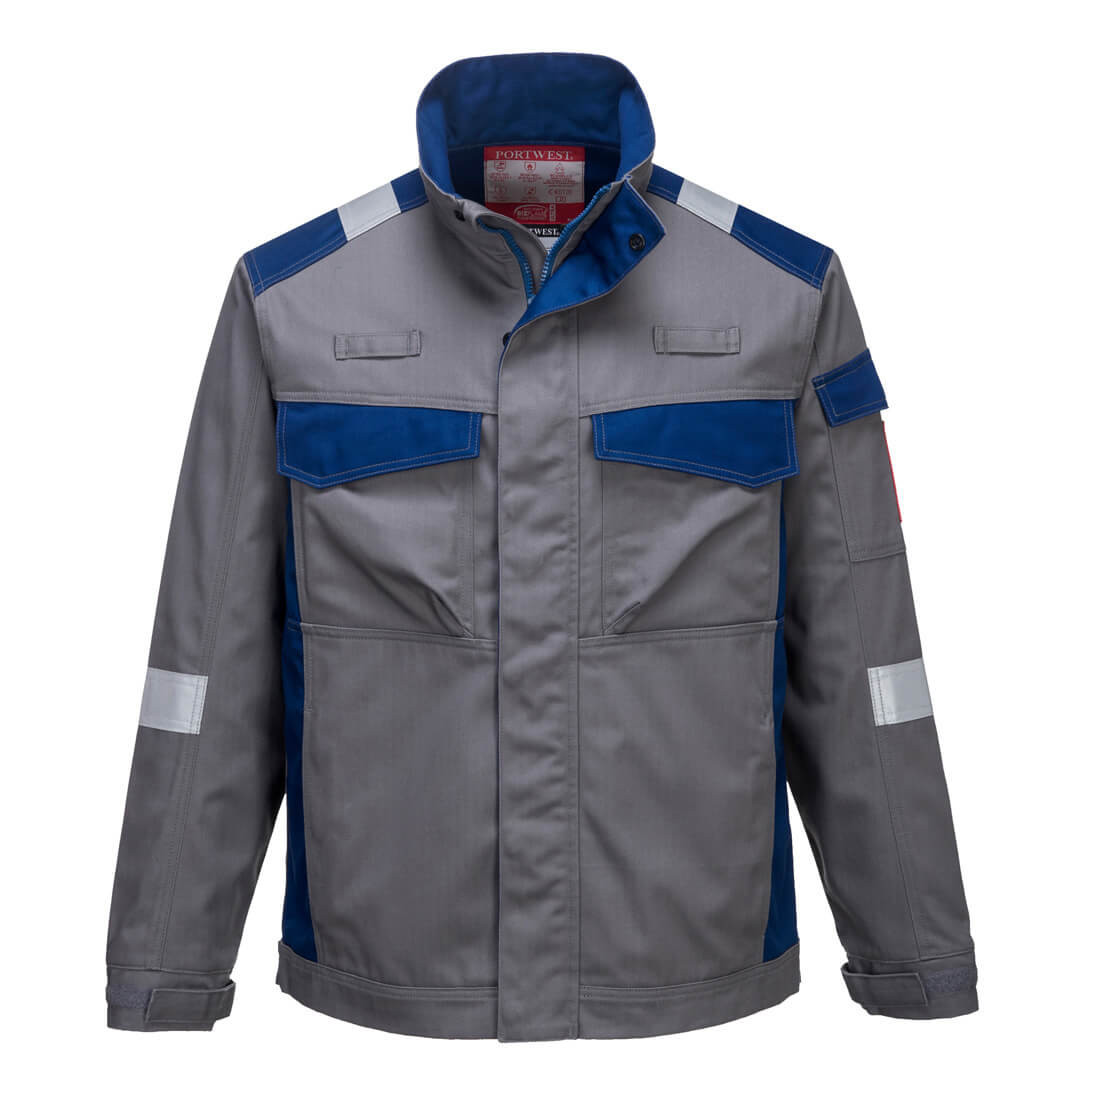 Bizflame Ultra Jacket - Arbeitskleidung